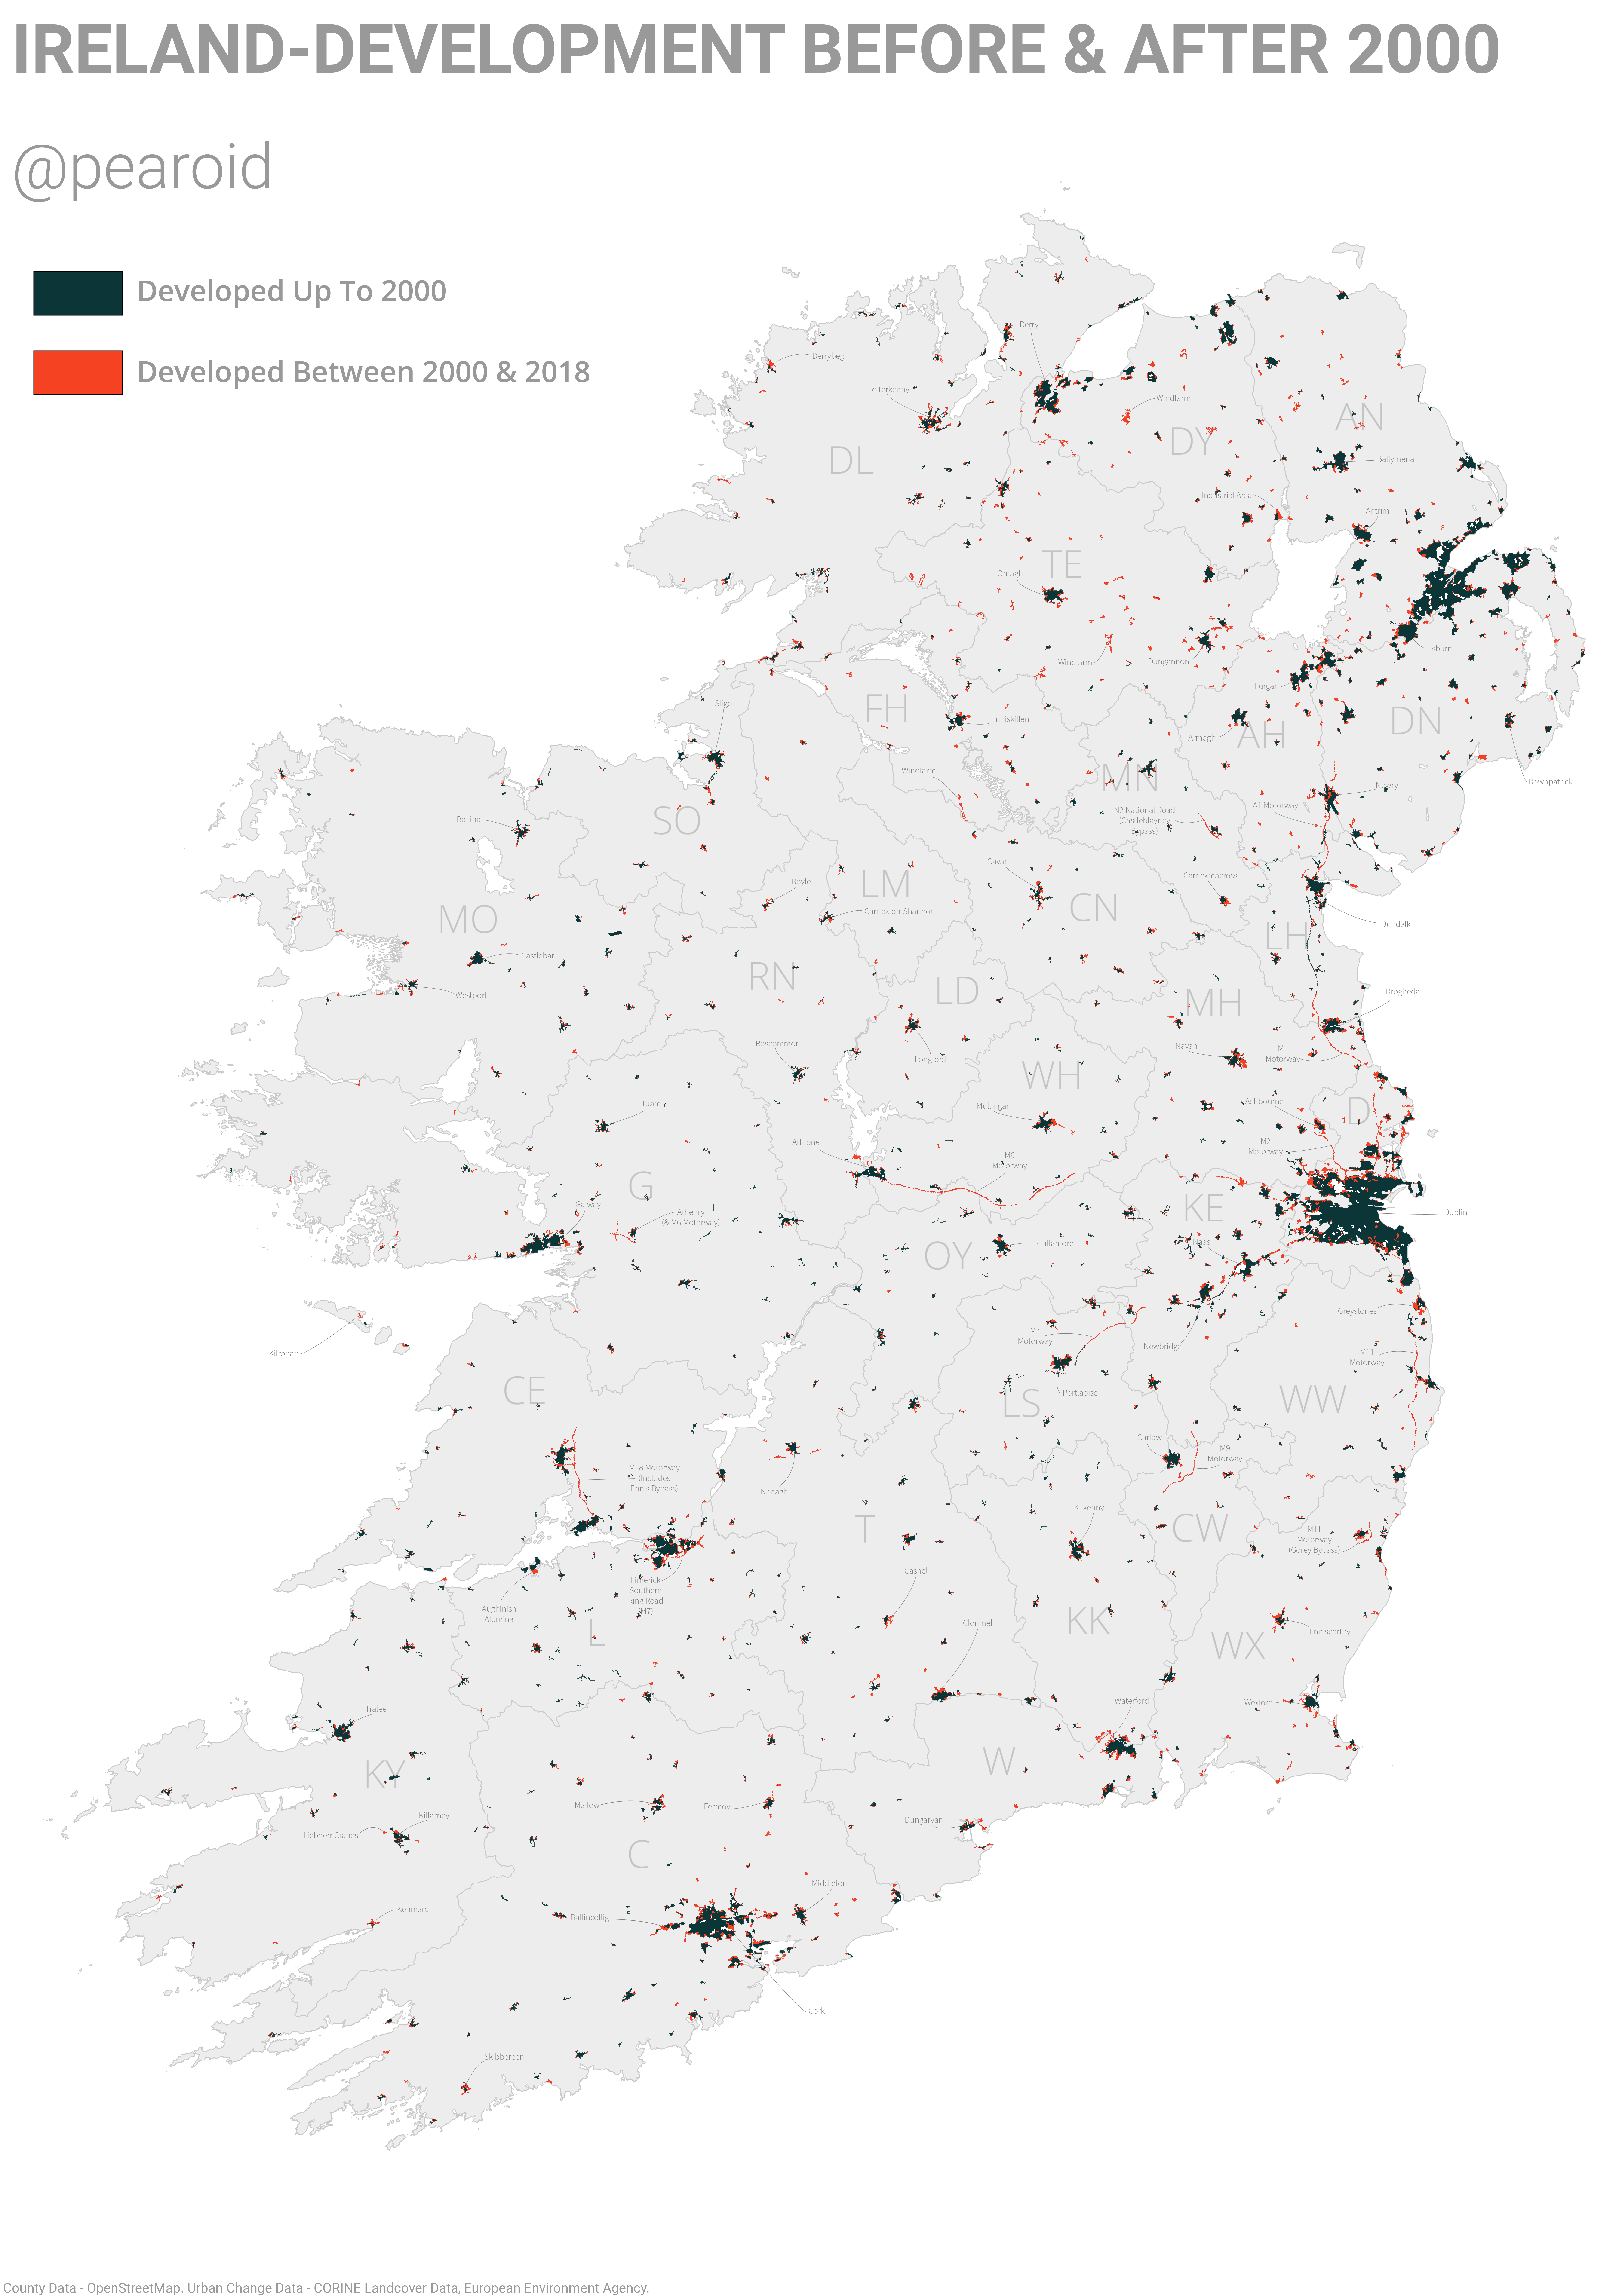 Development in Ireland